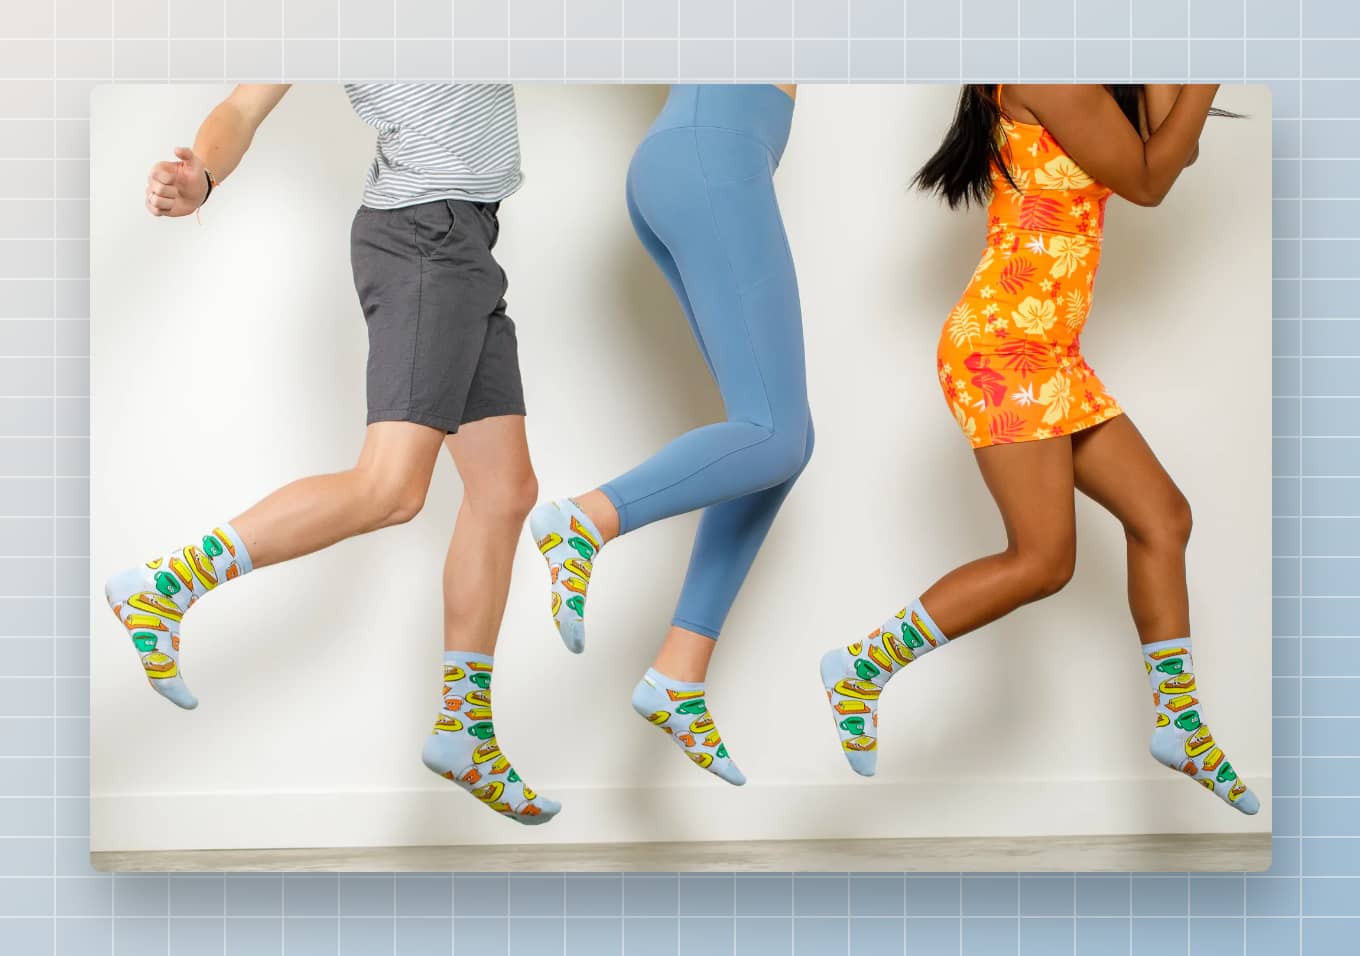 Meerdere mensen dansen met hun Awesome Socks Club sokken